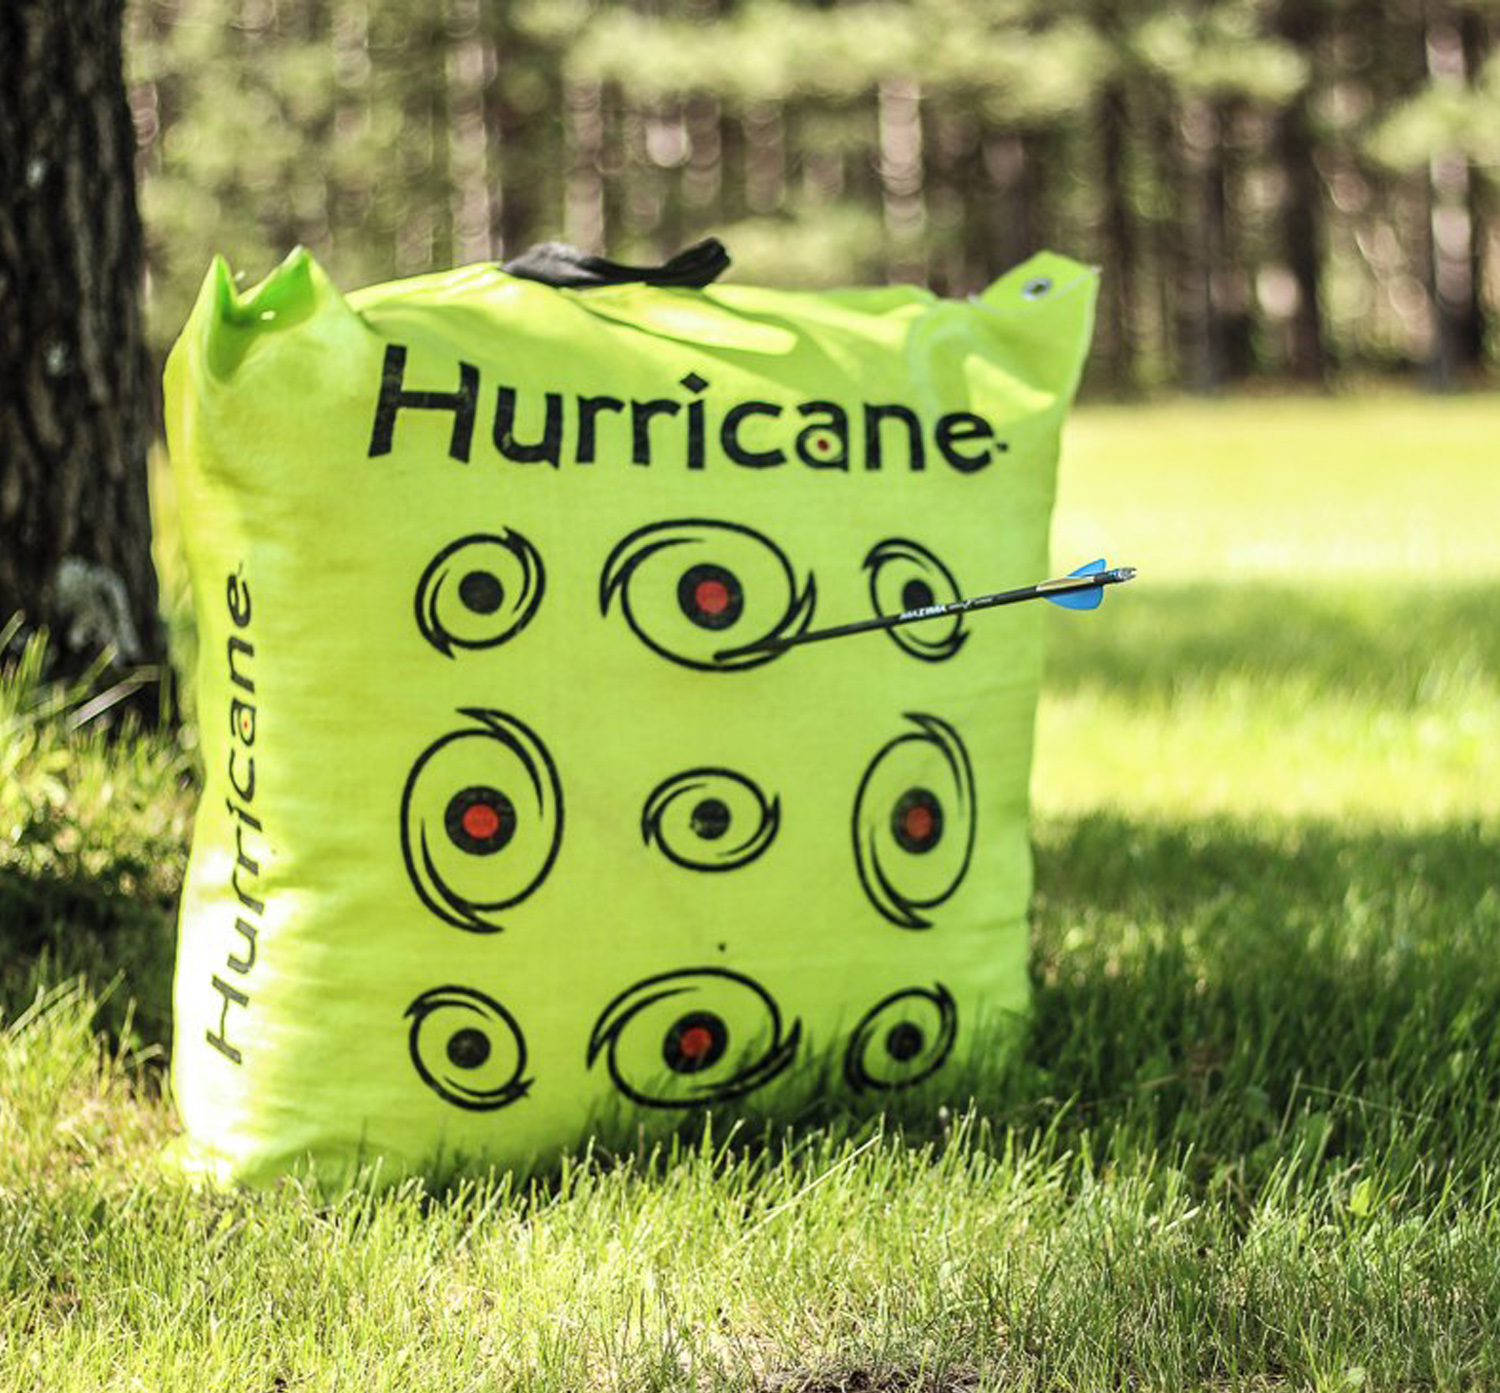 Hurricane Bag Targets